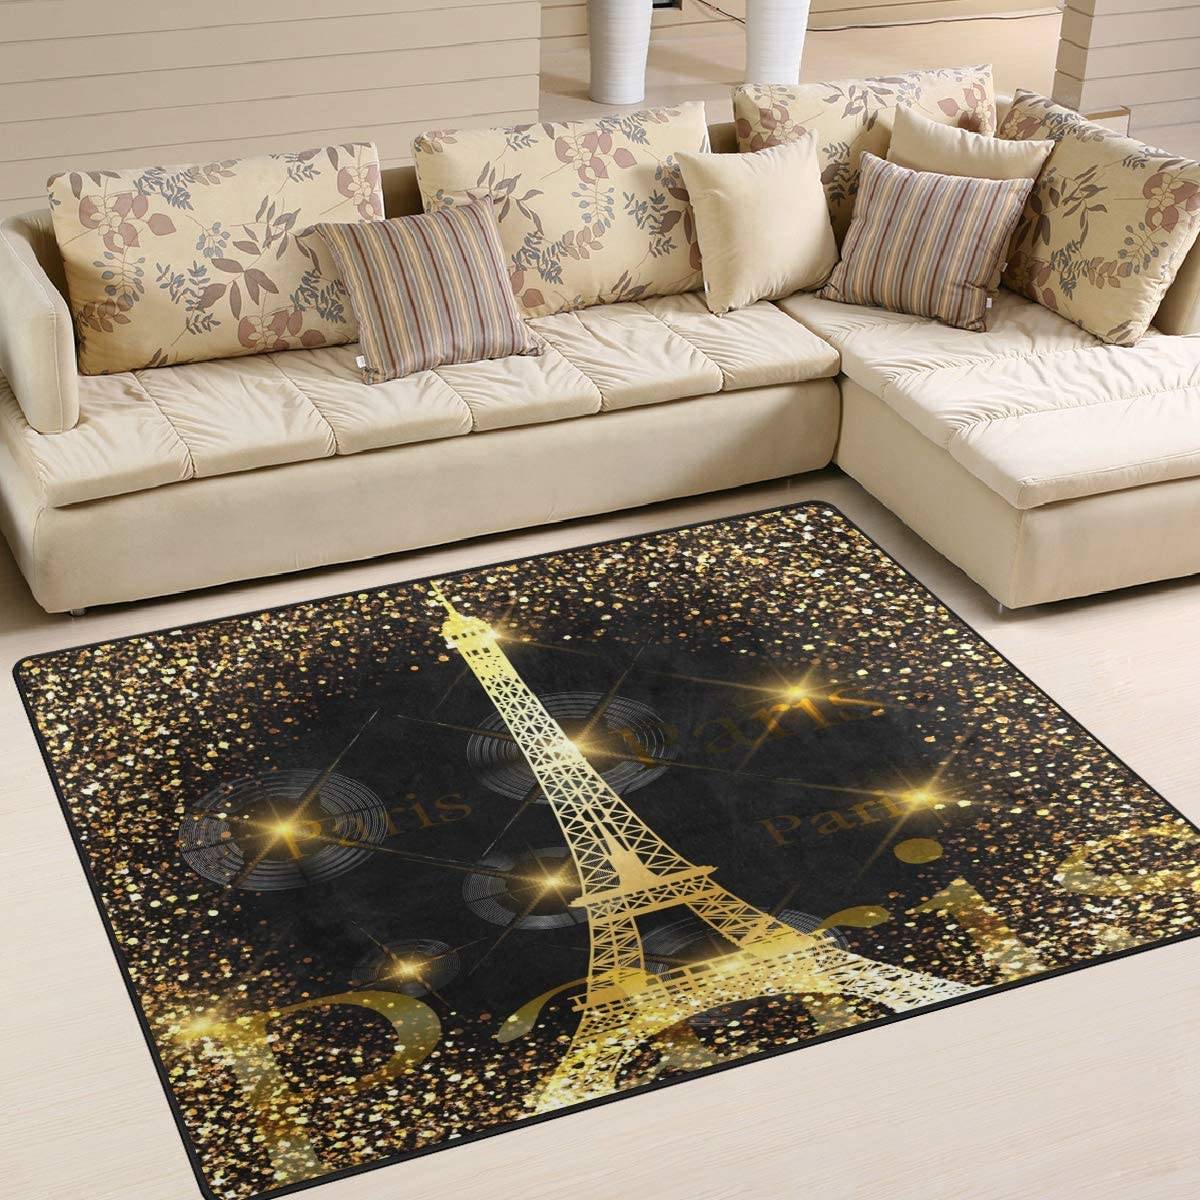 ALAZA Paris Street Eiffel Tower European Round Area Rug for Living Room Bedroom 3' Diameter 92 cm 